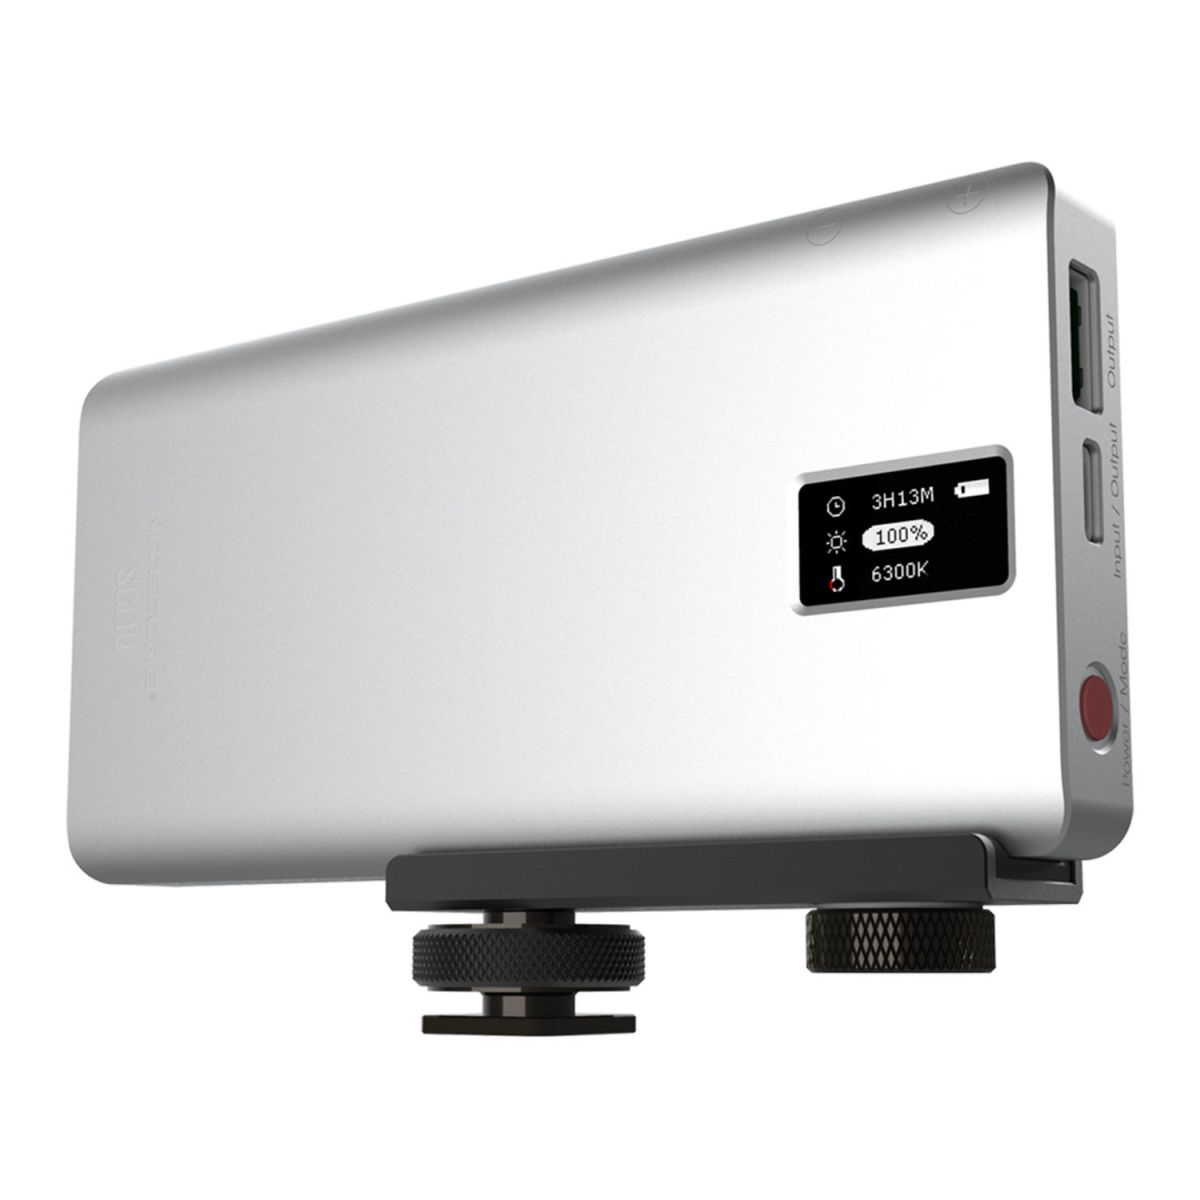 Nitecore SCL10 Smart Kamera Licht & Powerbank